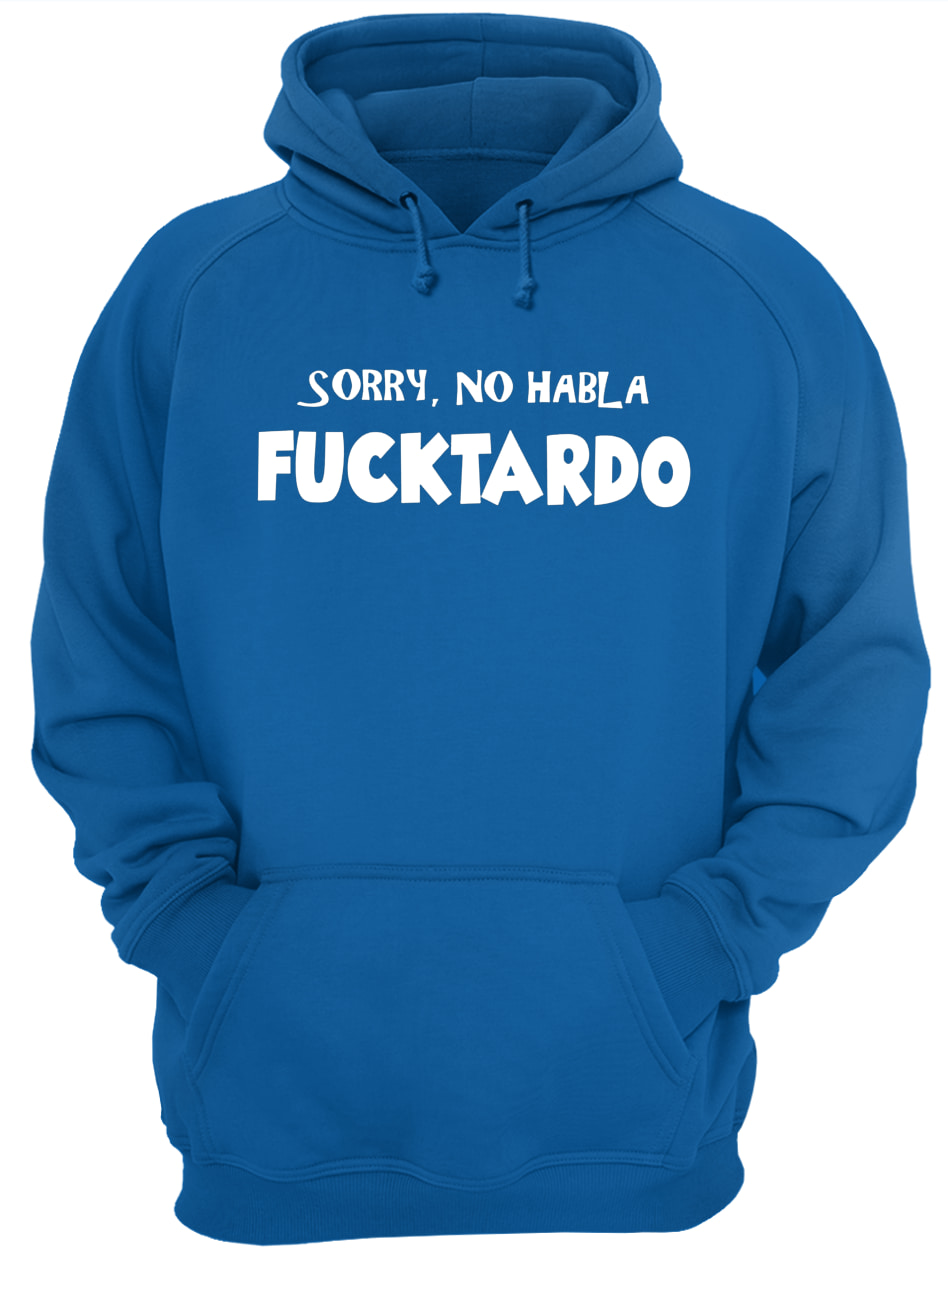 Sorry no habla fucktardo hoodie